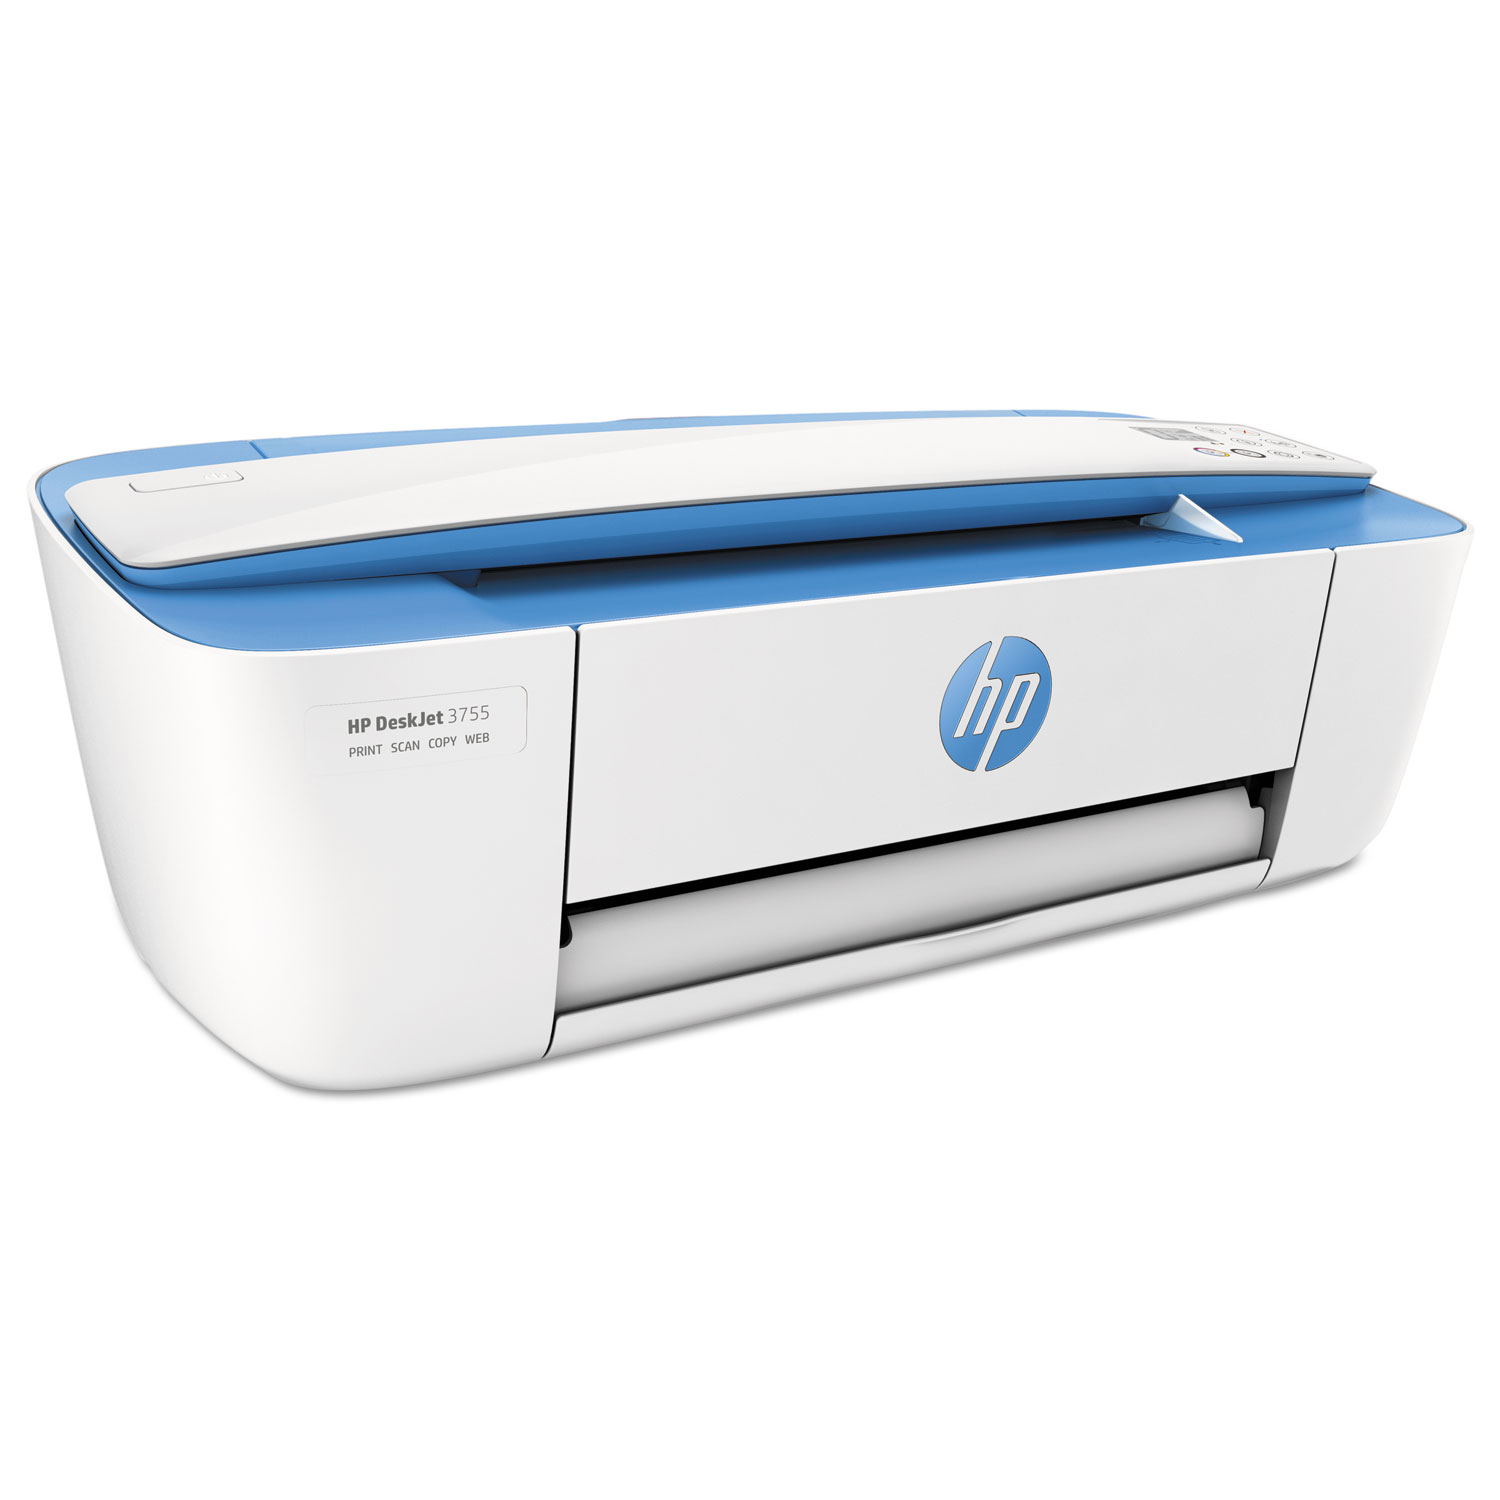  HP J9V90A#B1H DeskJet 3755 All-in-One Printer, Copy/Print/Scan, Blue (HEWJ9V90A) 